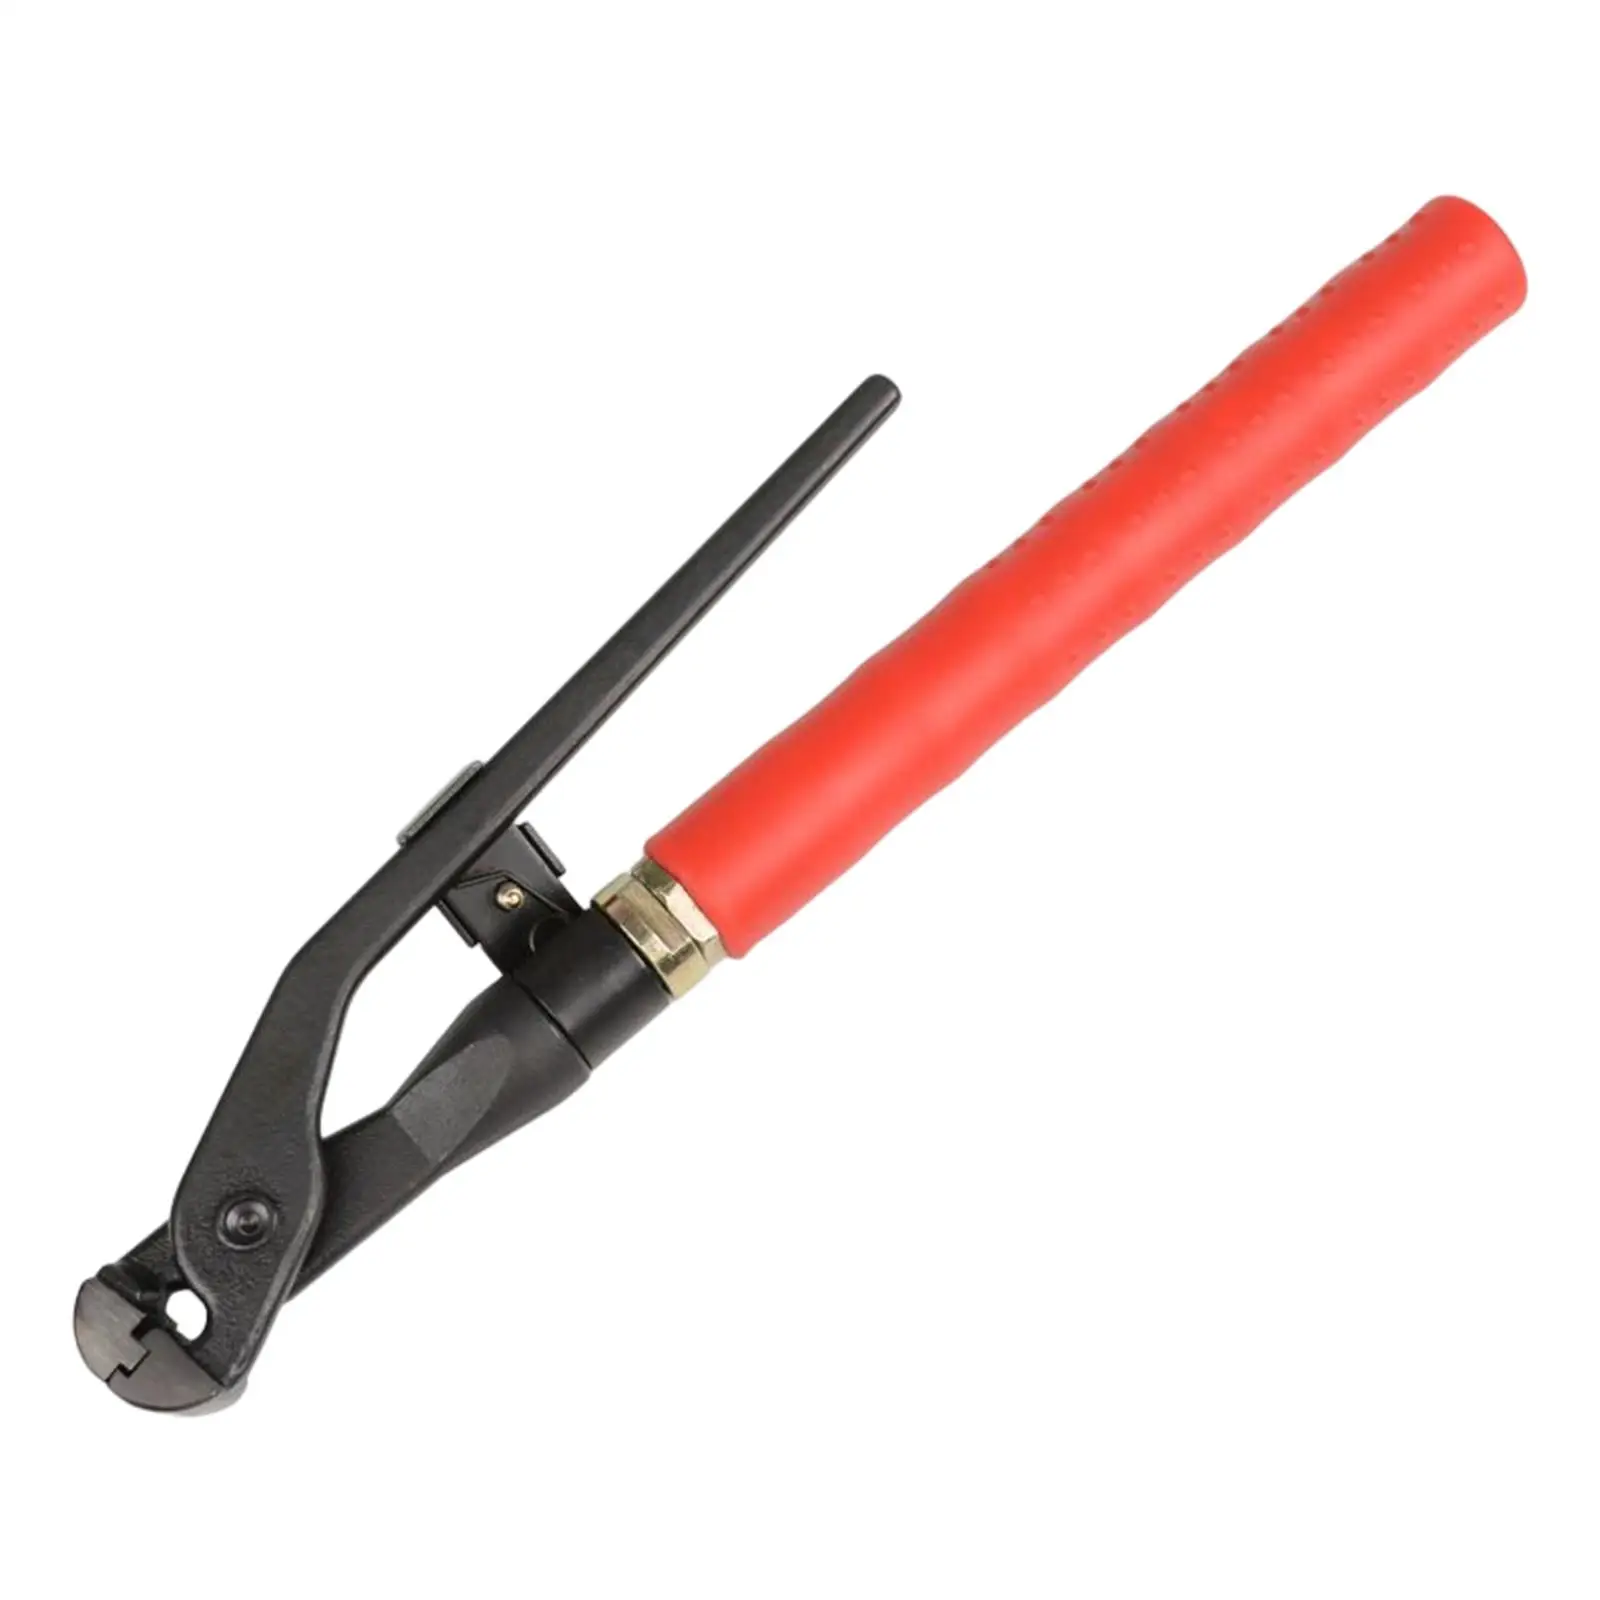 Pliers Manual Wire Tying Reinforcing Reinforcement Tool Hand Tool Tweezer Nose Pliers Multifunction Comfort Grip